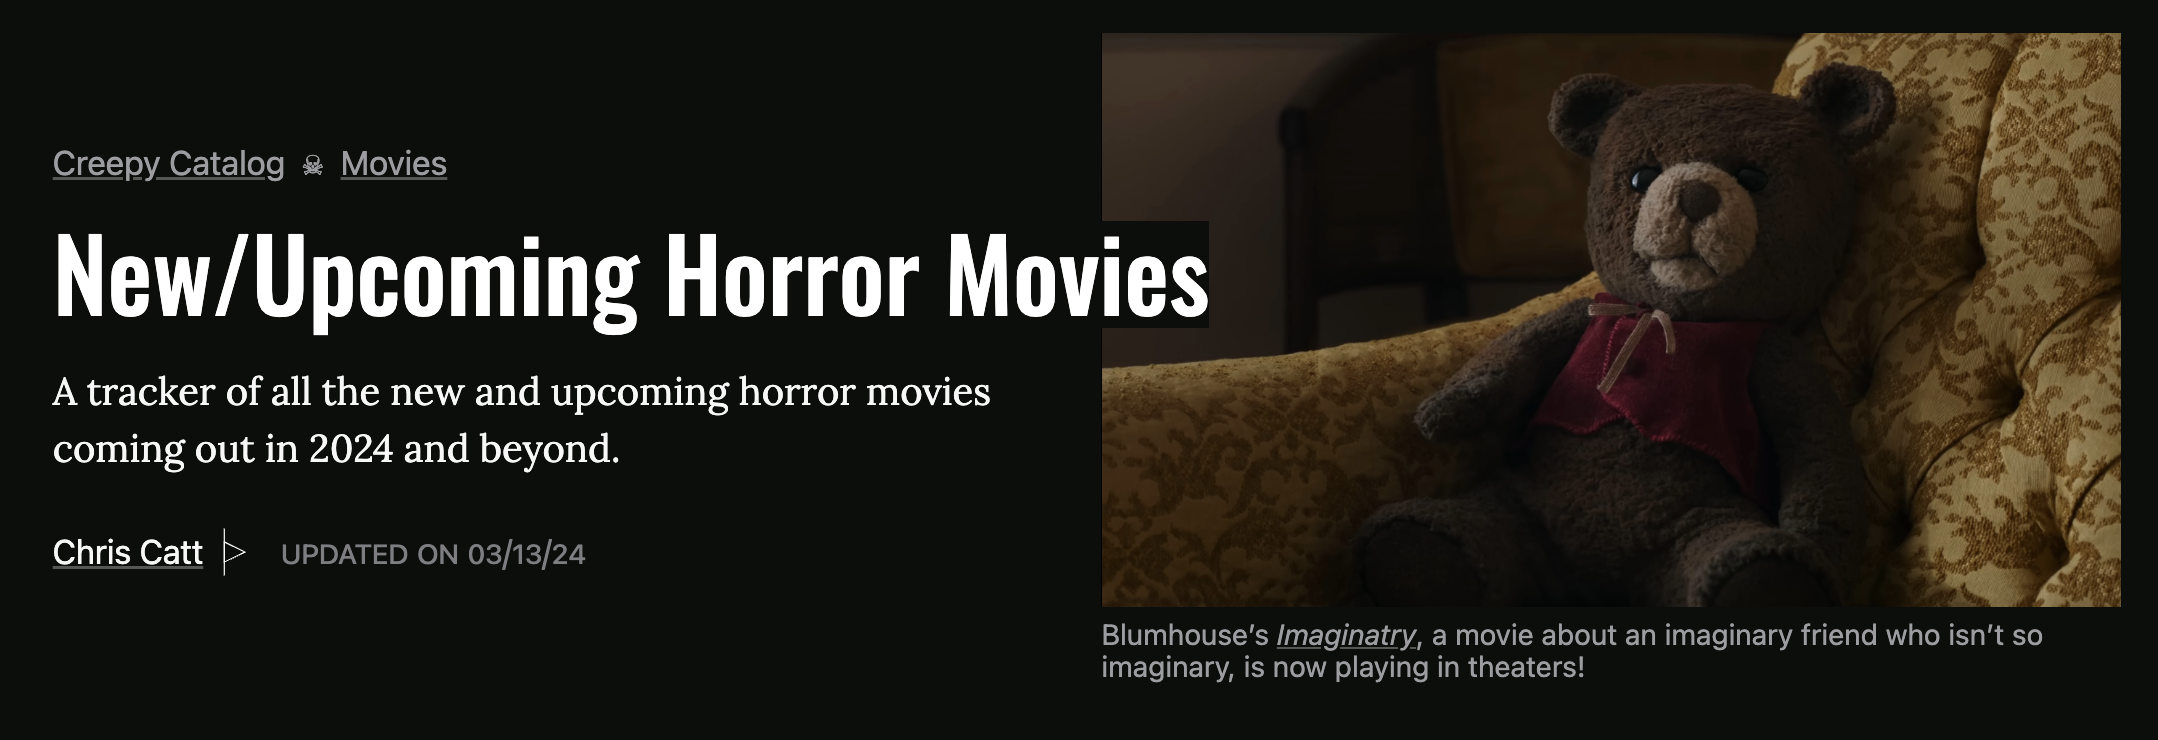 New/Upcoming Horror Movies